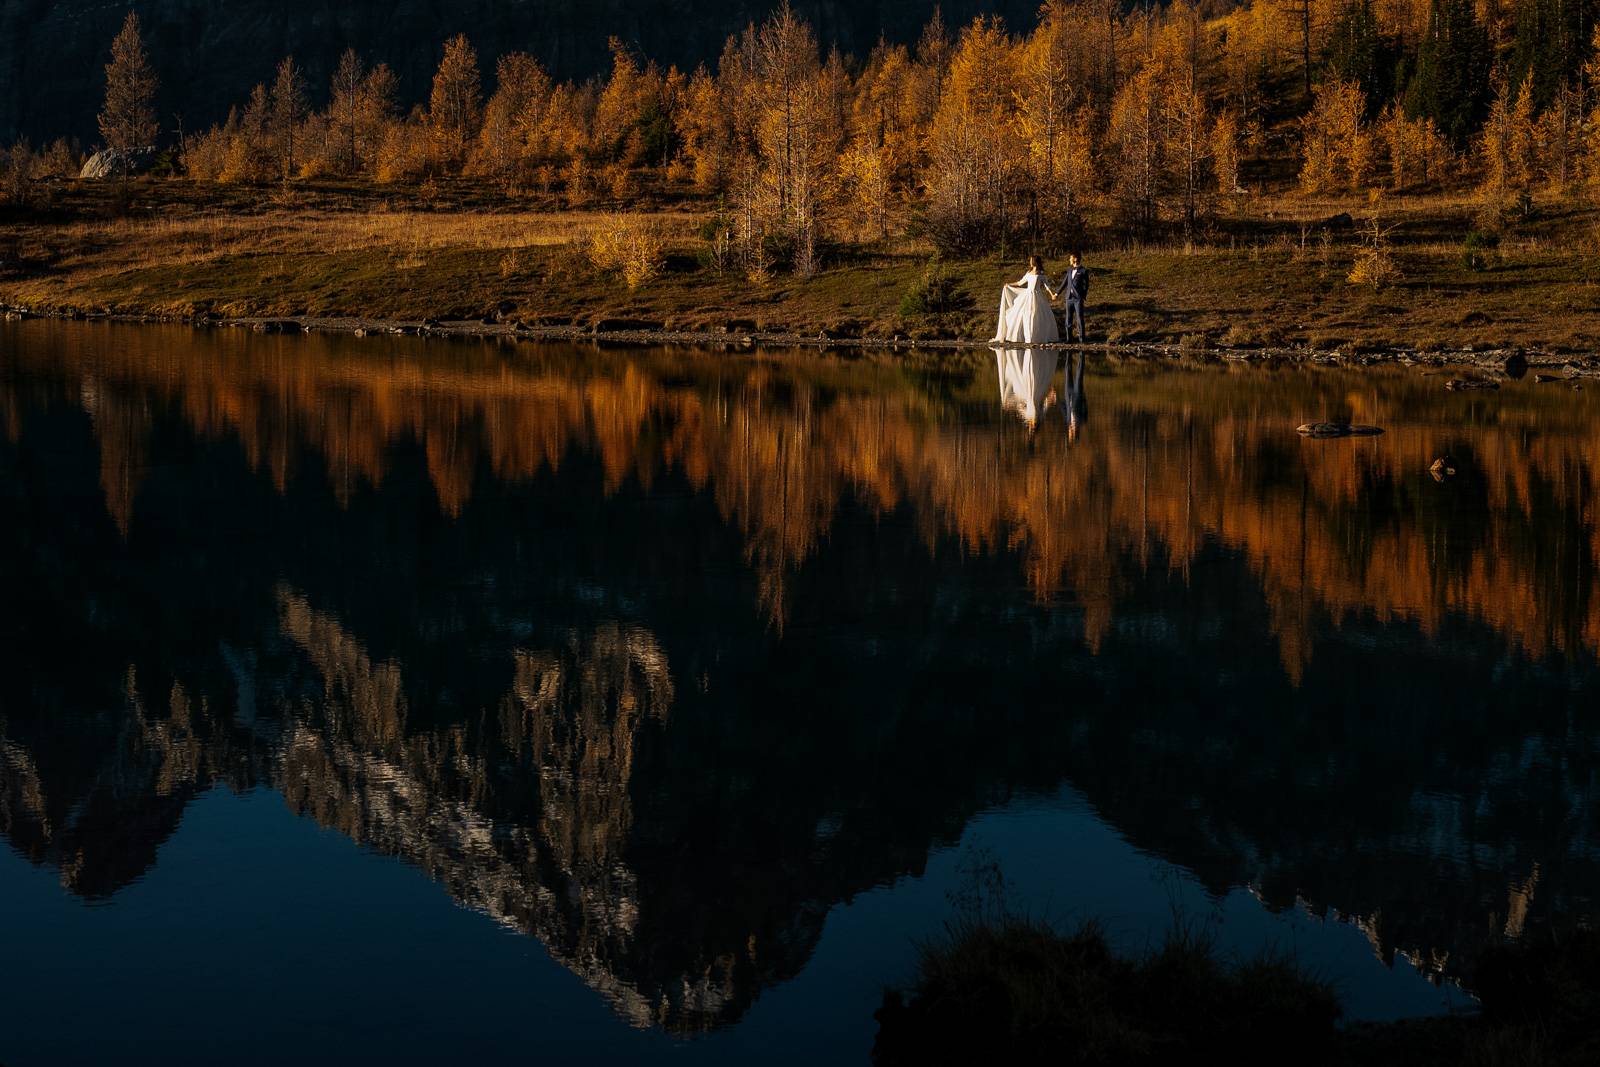 mountain reflection on the lake